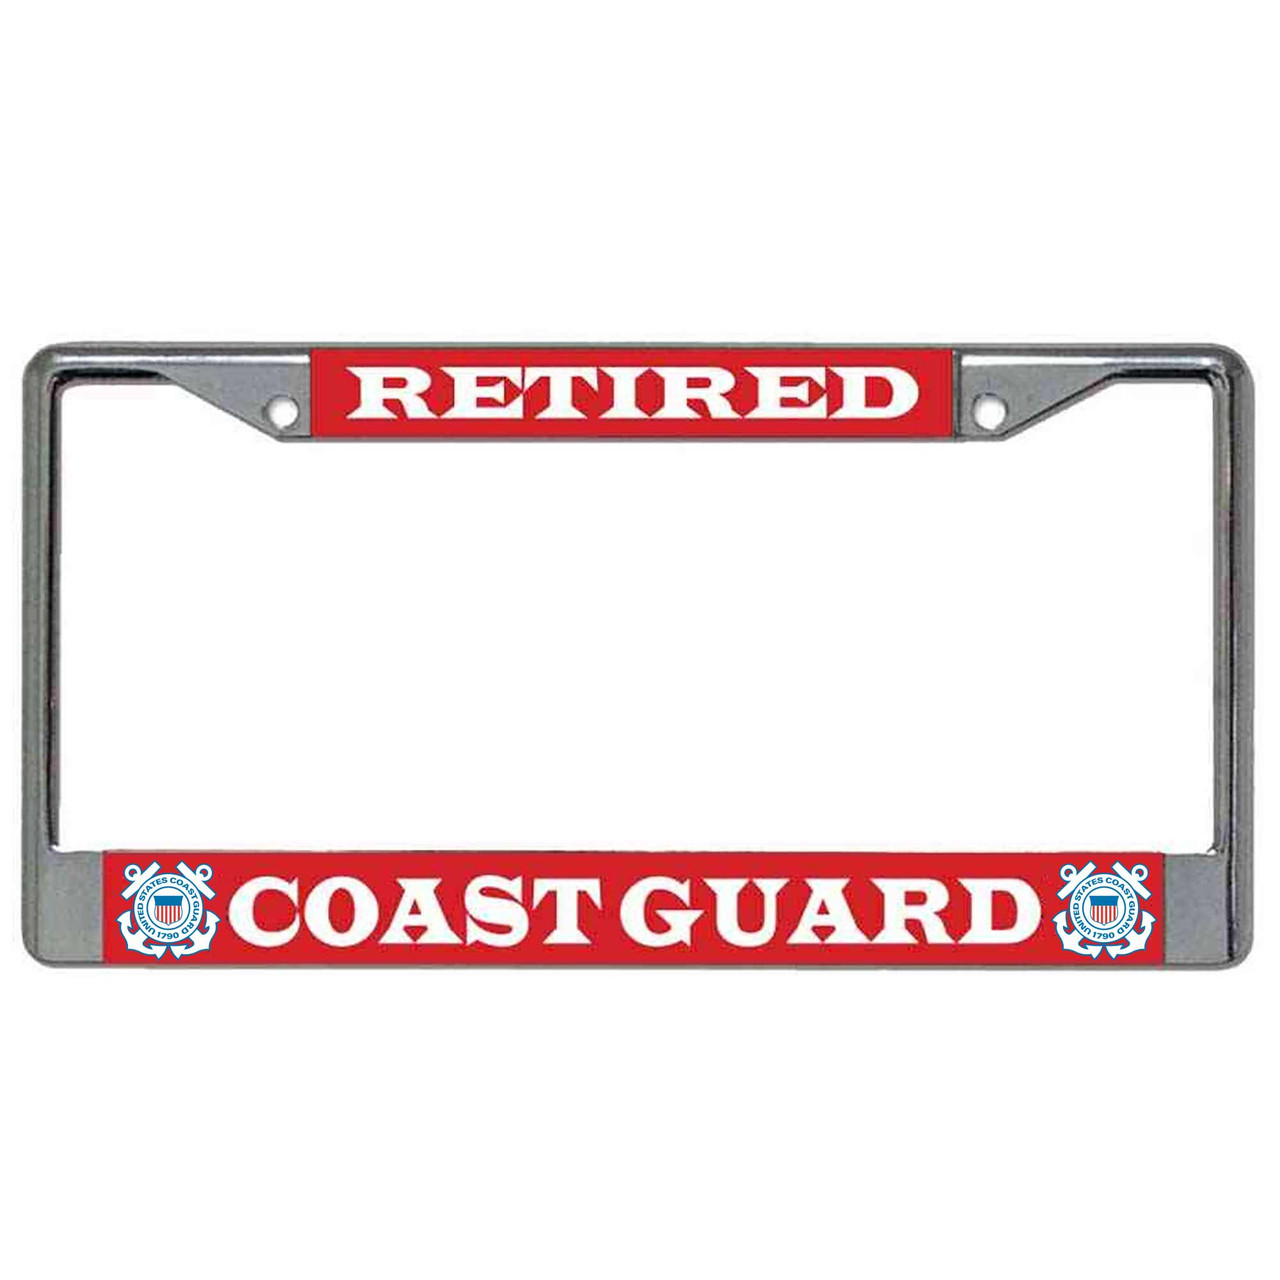 coast guard retired license plate frame